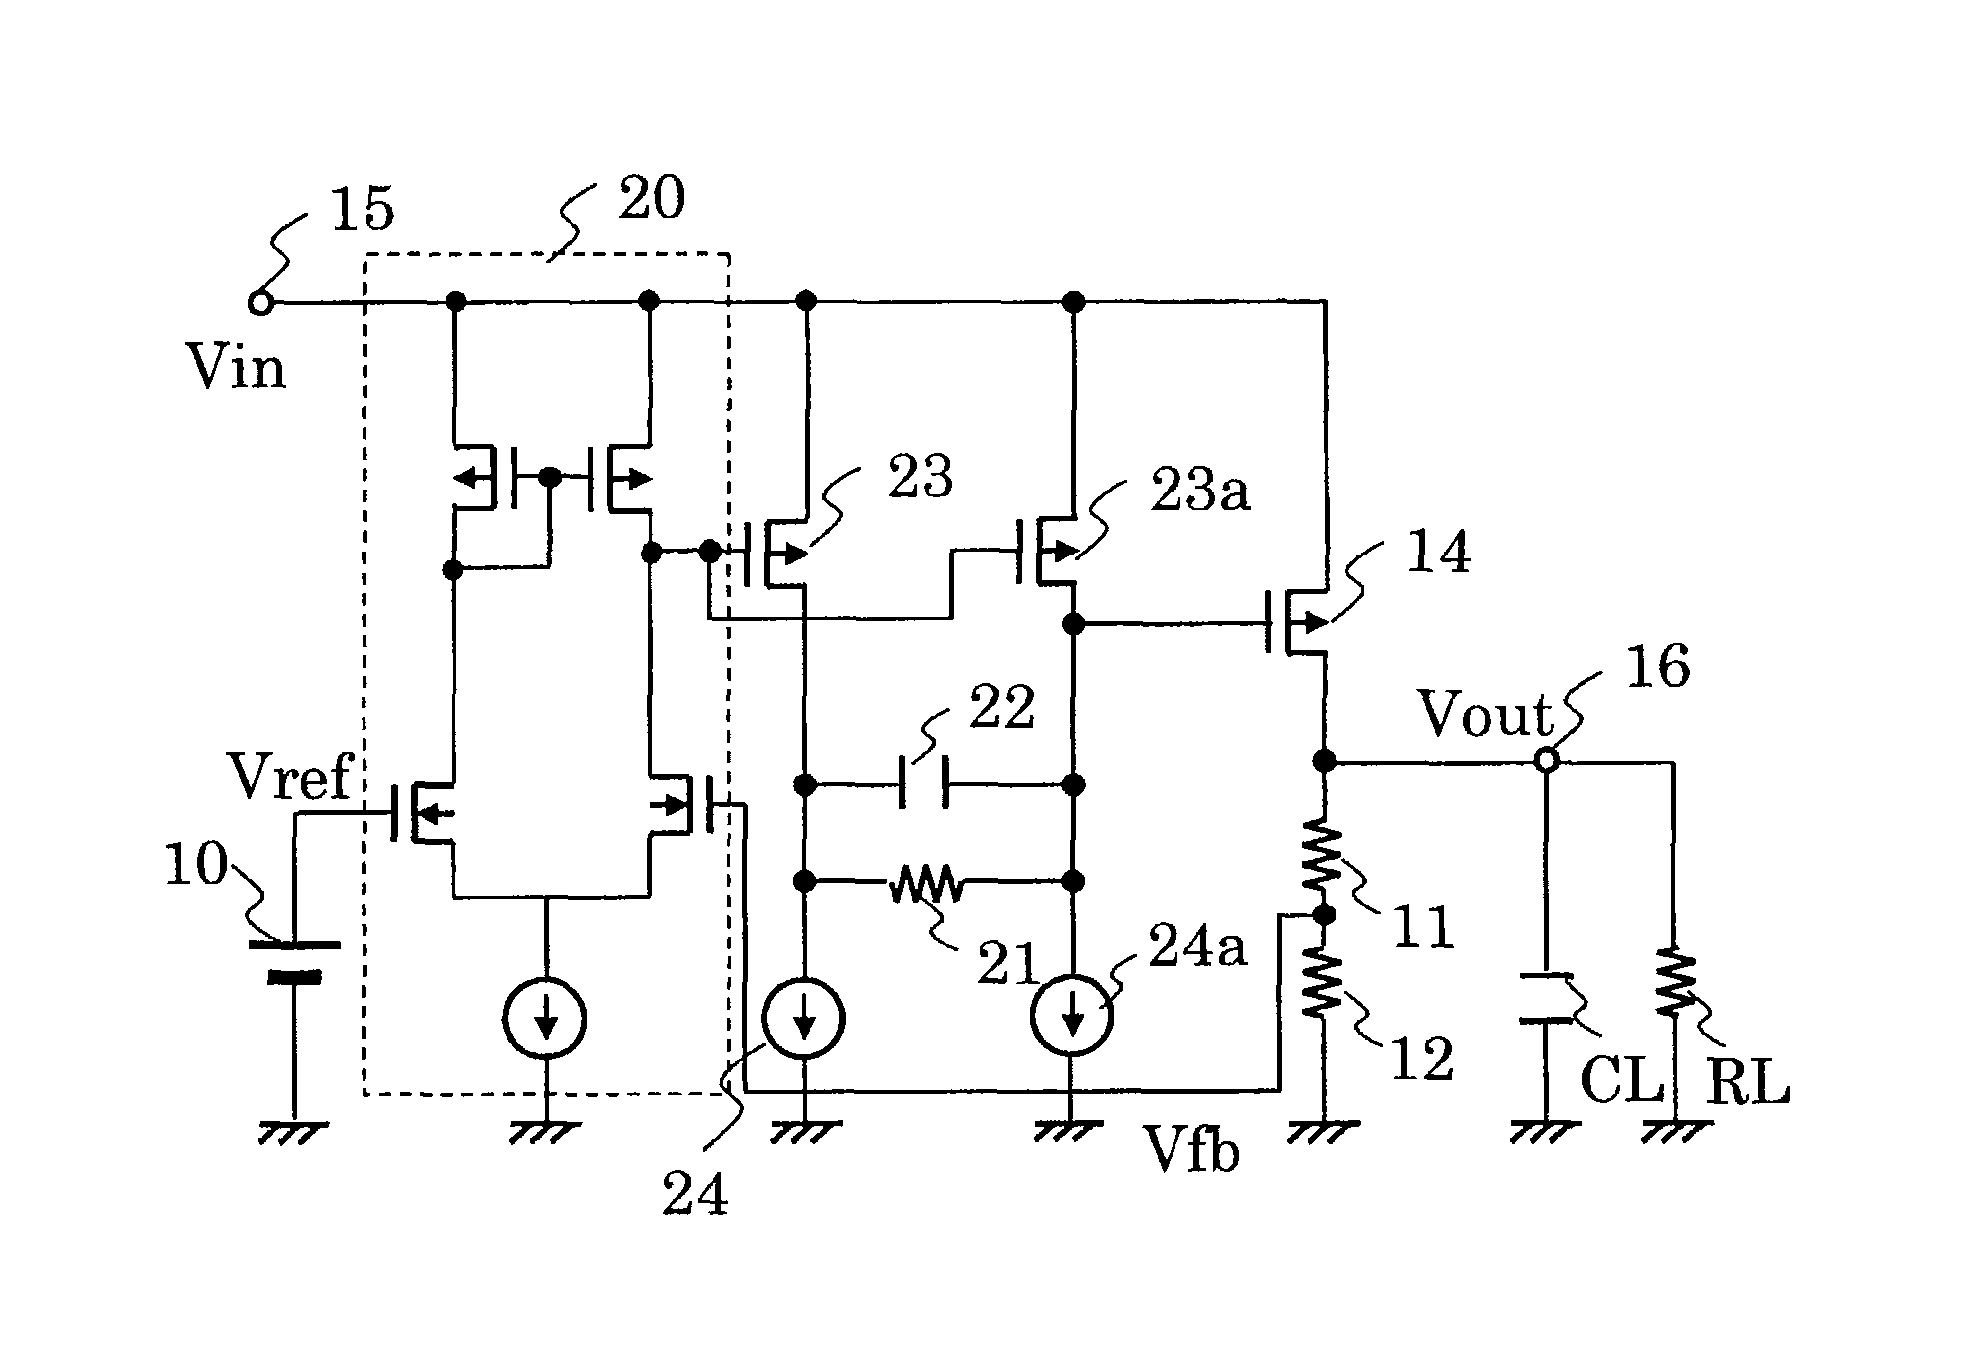 Voltage regulator with transient response